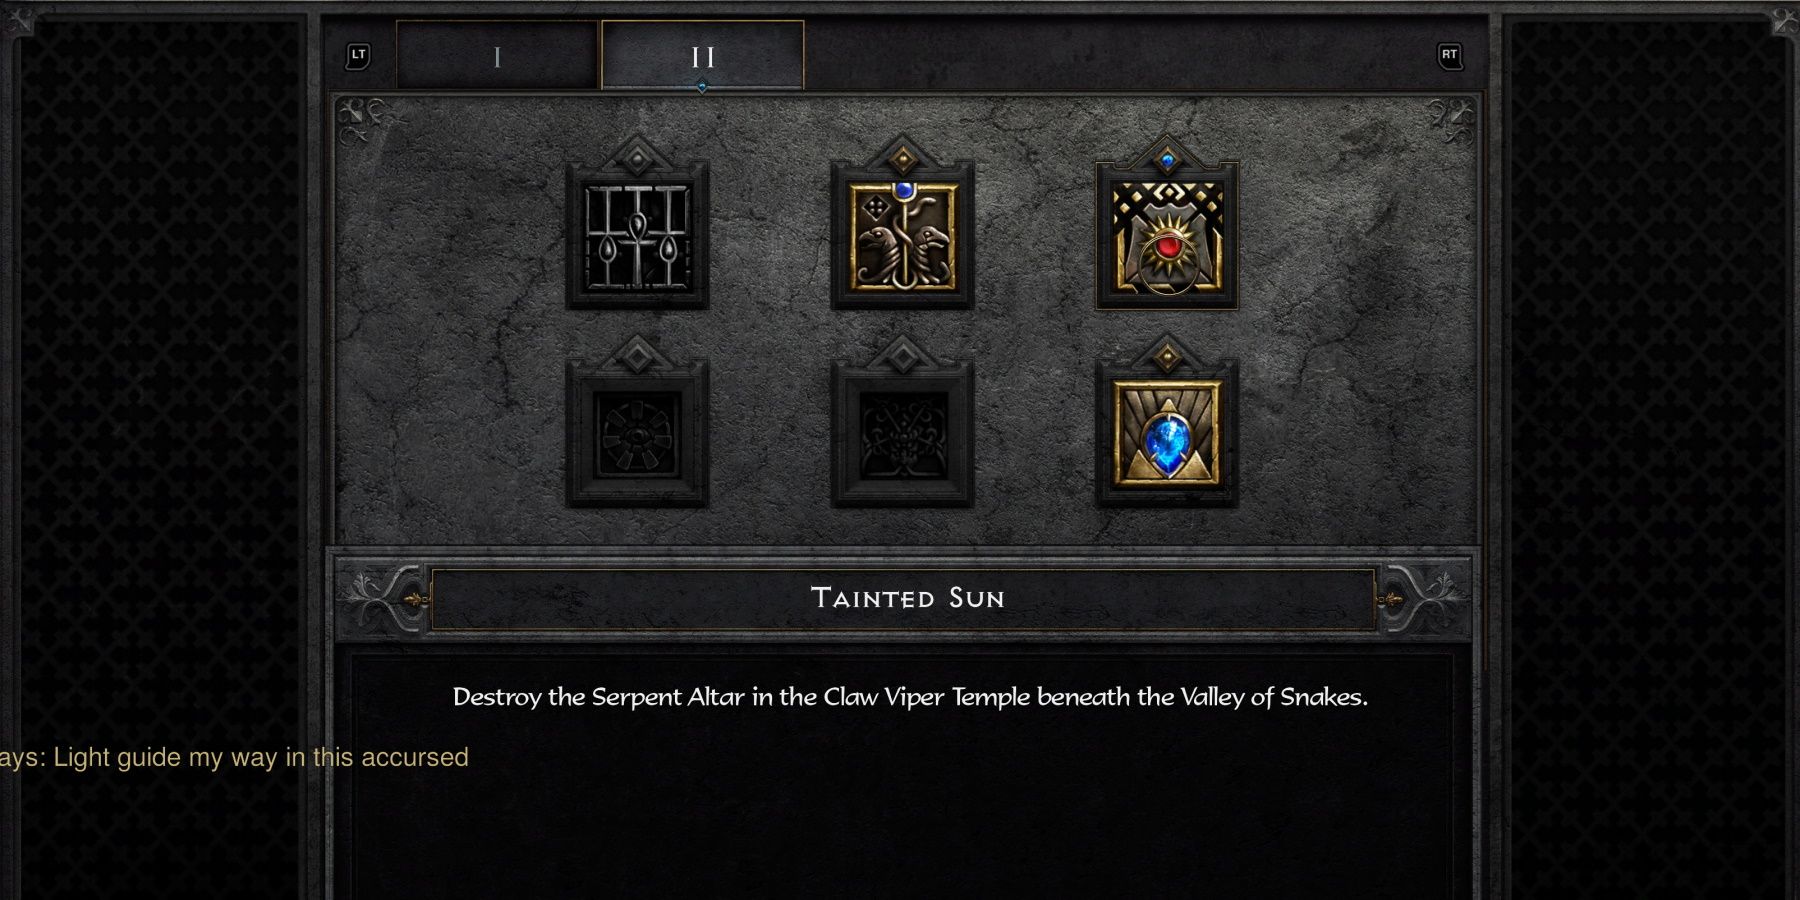 Diablo 2 Resurrected Looking At The Tainted Sun Quest Description